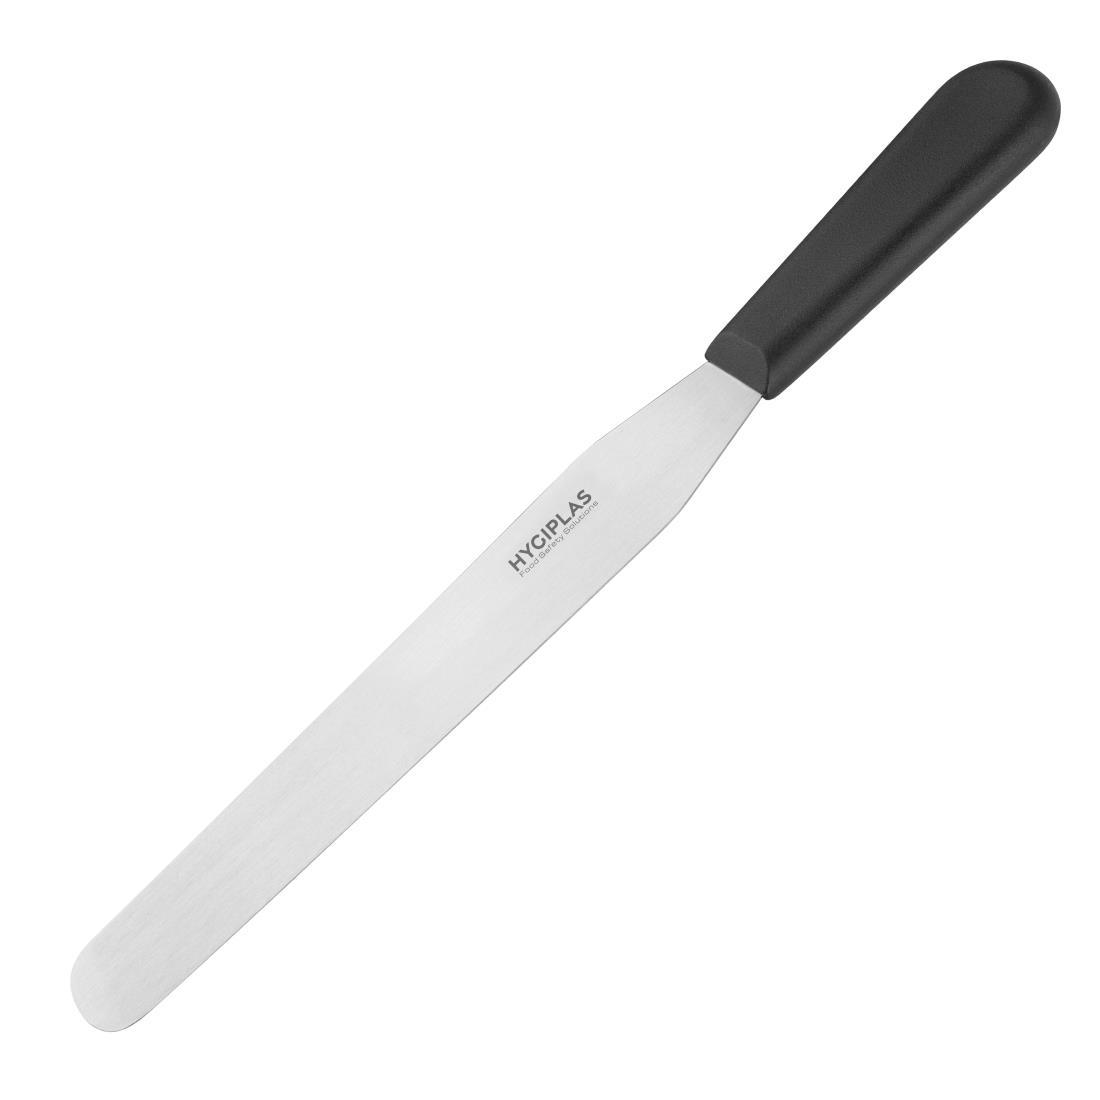 Hygiplas Straight Blade Palette Knife Black 25.5cm - D406  - 1